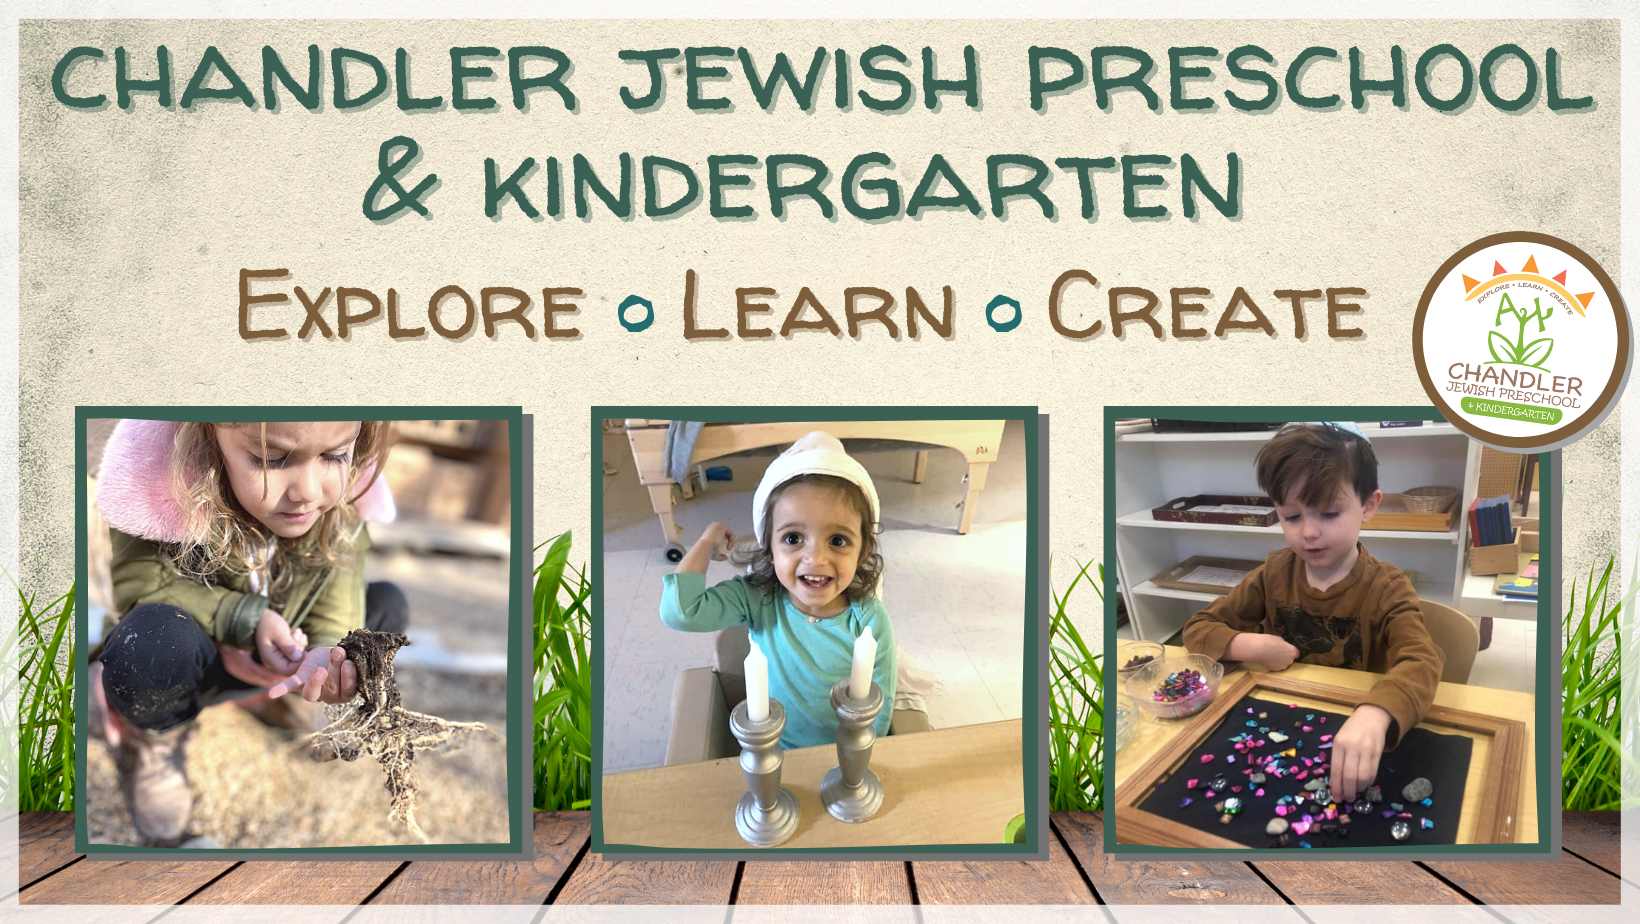 Chandler Jewish Preschool